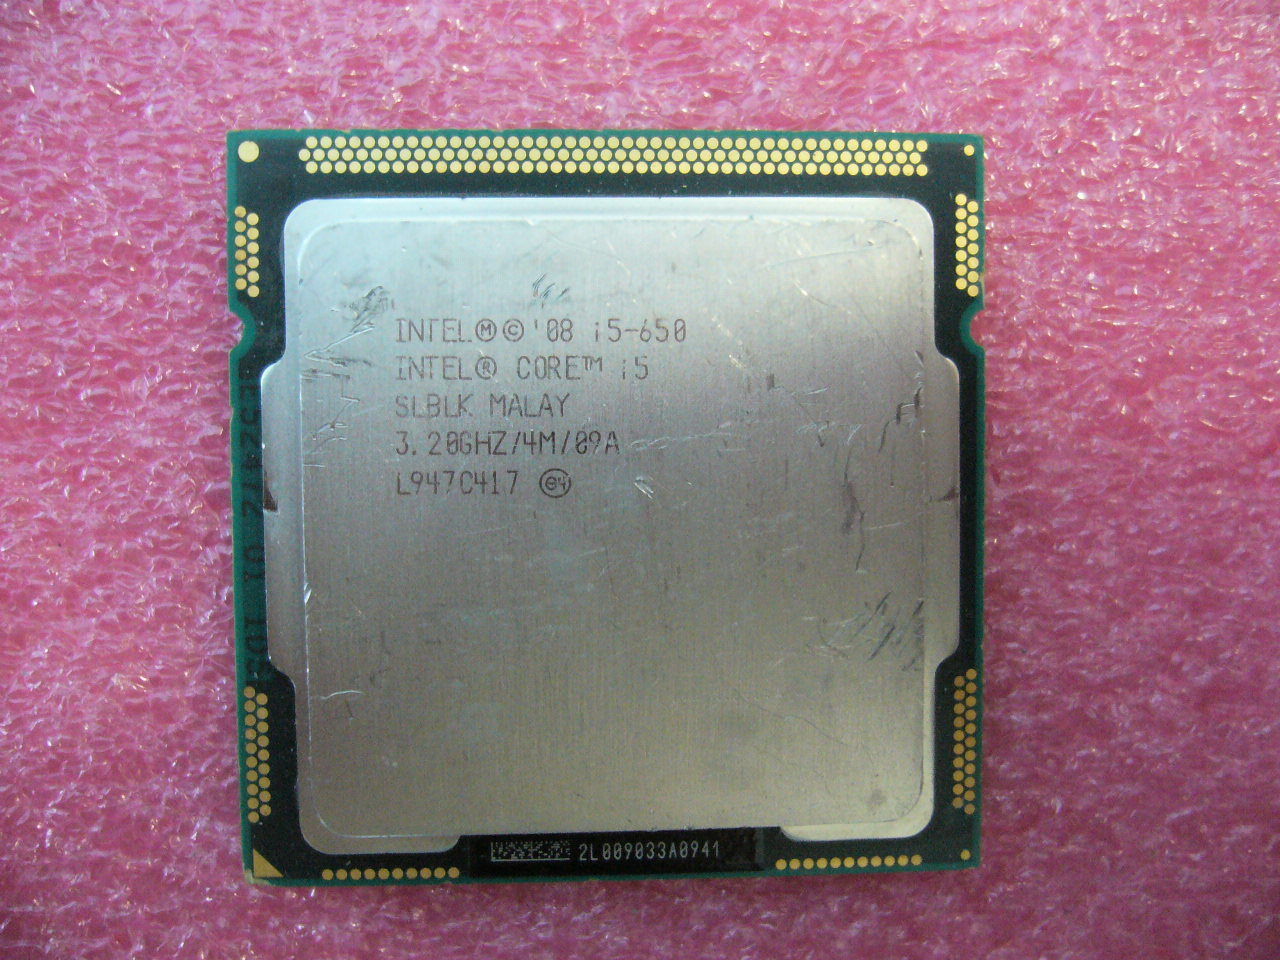 QTY 1x INTEL Core i5 Dual Core CPU i5-650 3.20GHZ/4MB LGA1156 SLBTJ SLBLK - zum Schließen ins Bild klicken